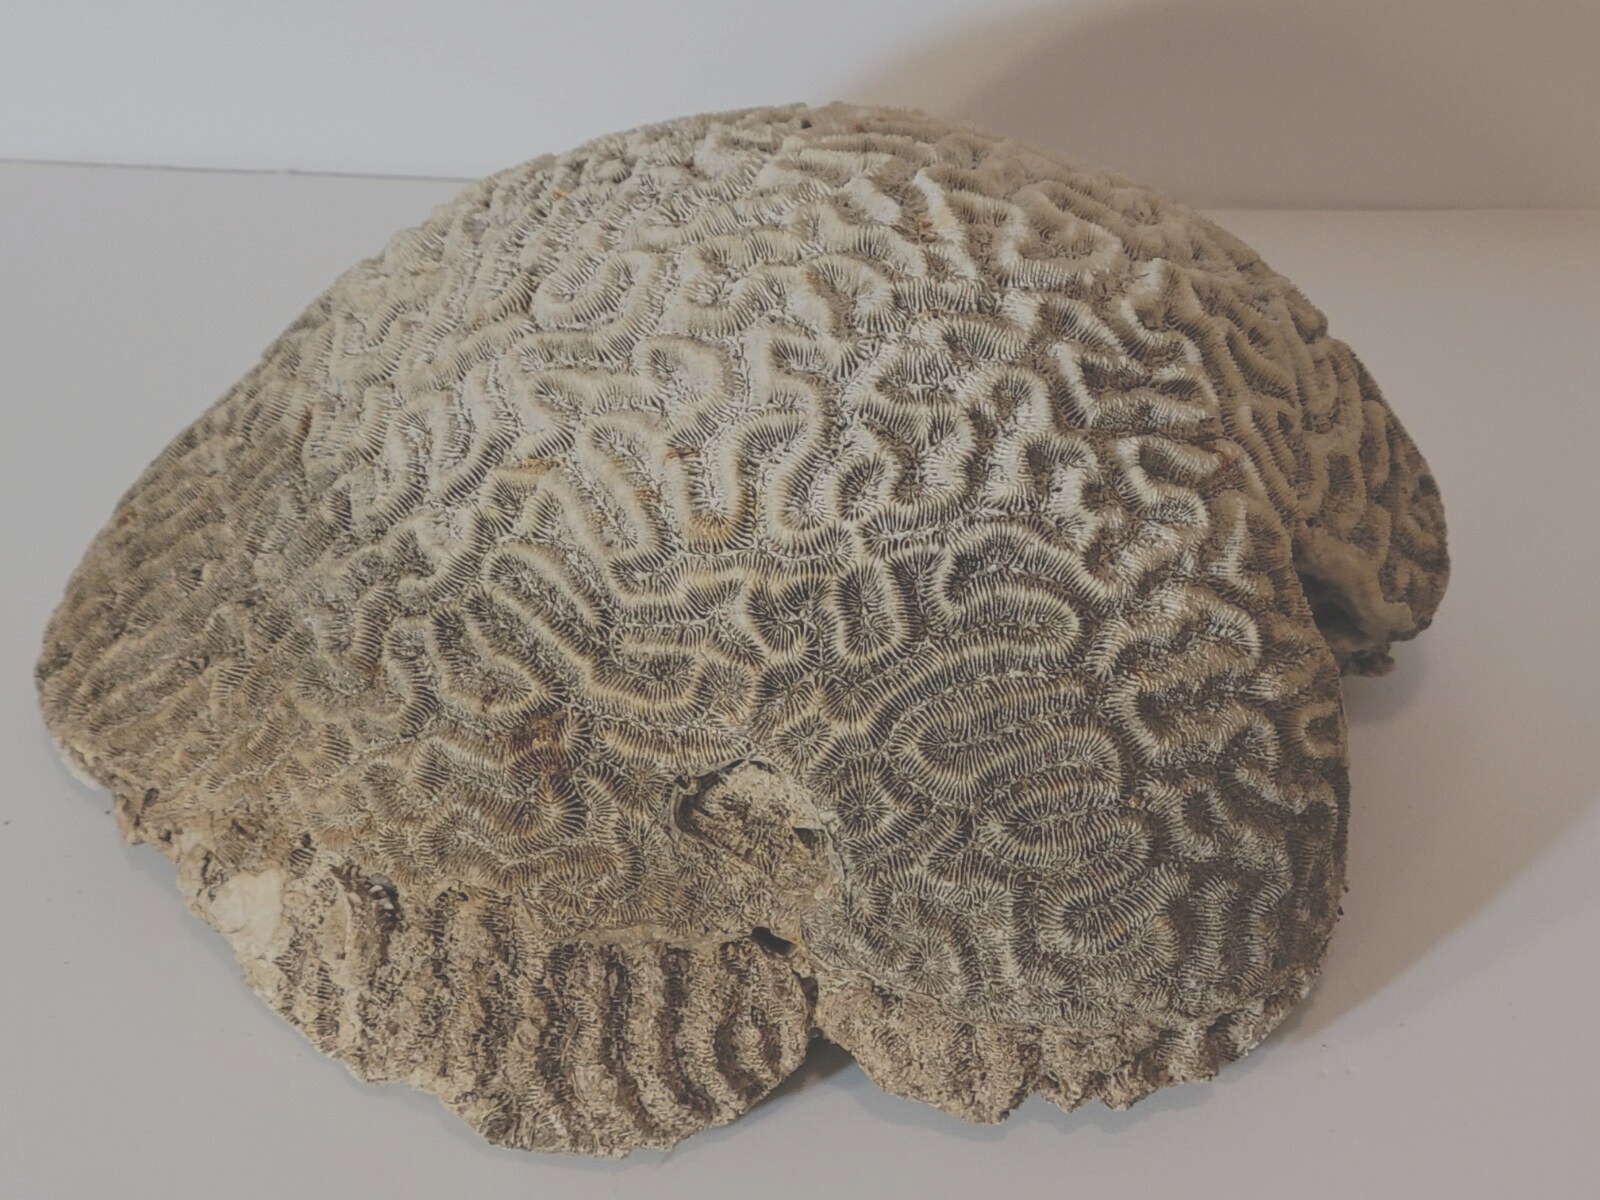 Brain Coral Large Heavy Natural Specimen 5+ Pounds